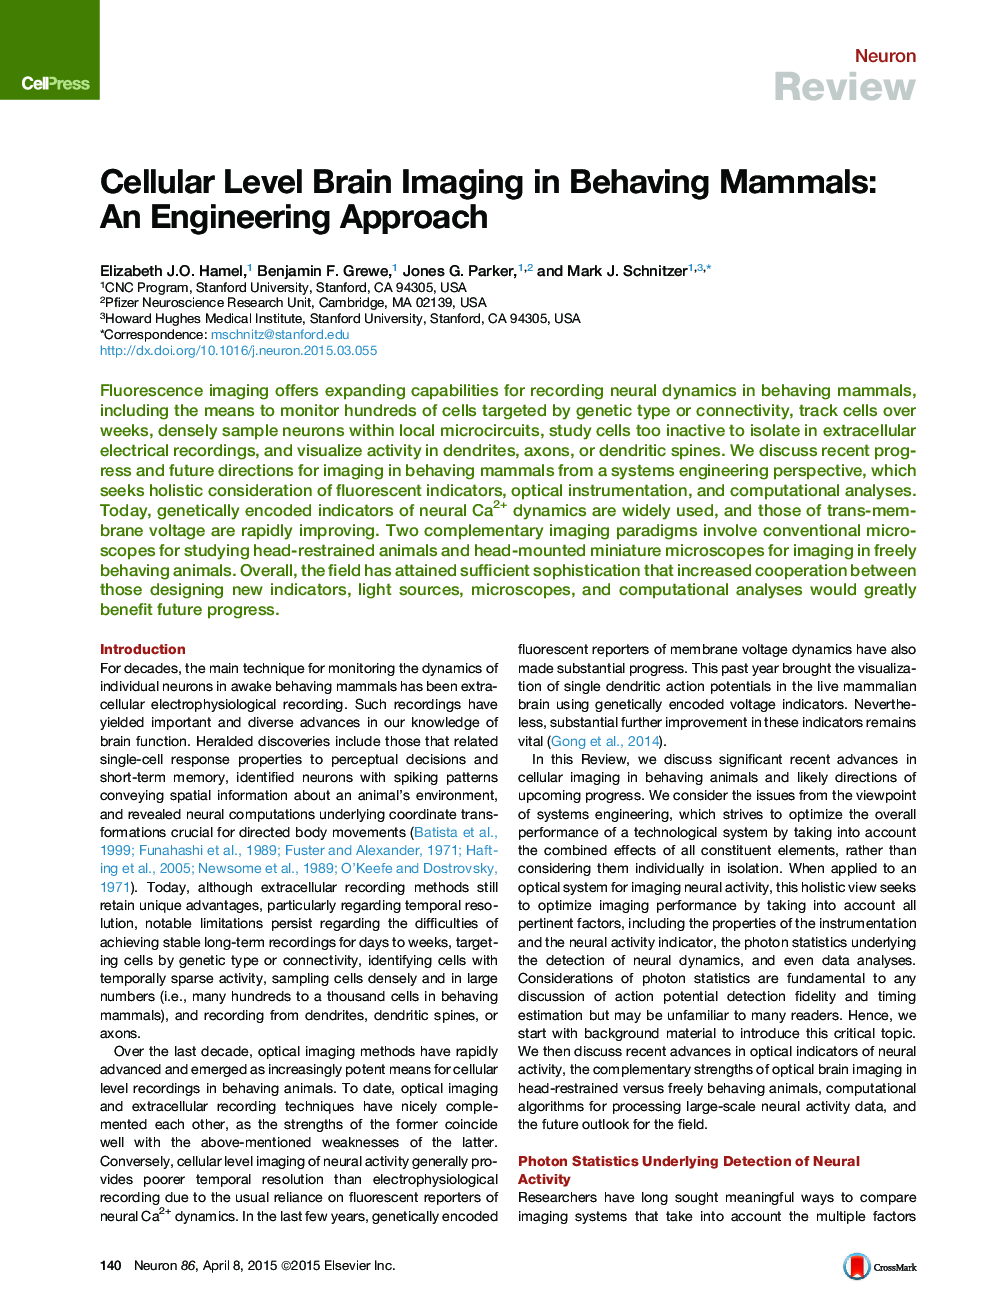 Cellular Level Brain Imaging in Behaving Mammals: An Engineering Approach